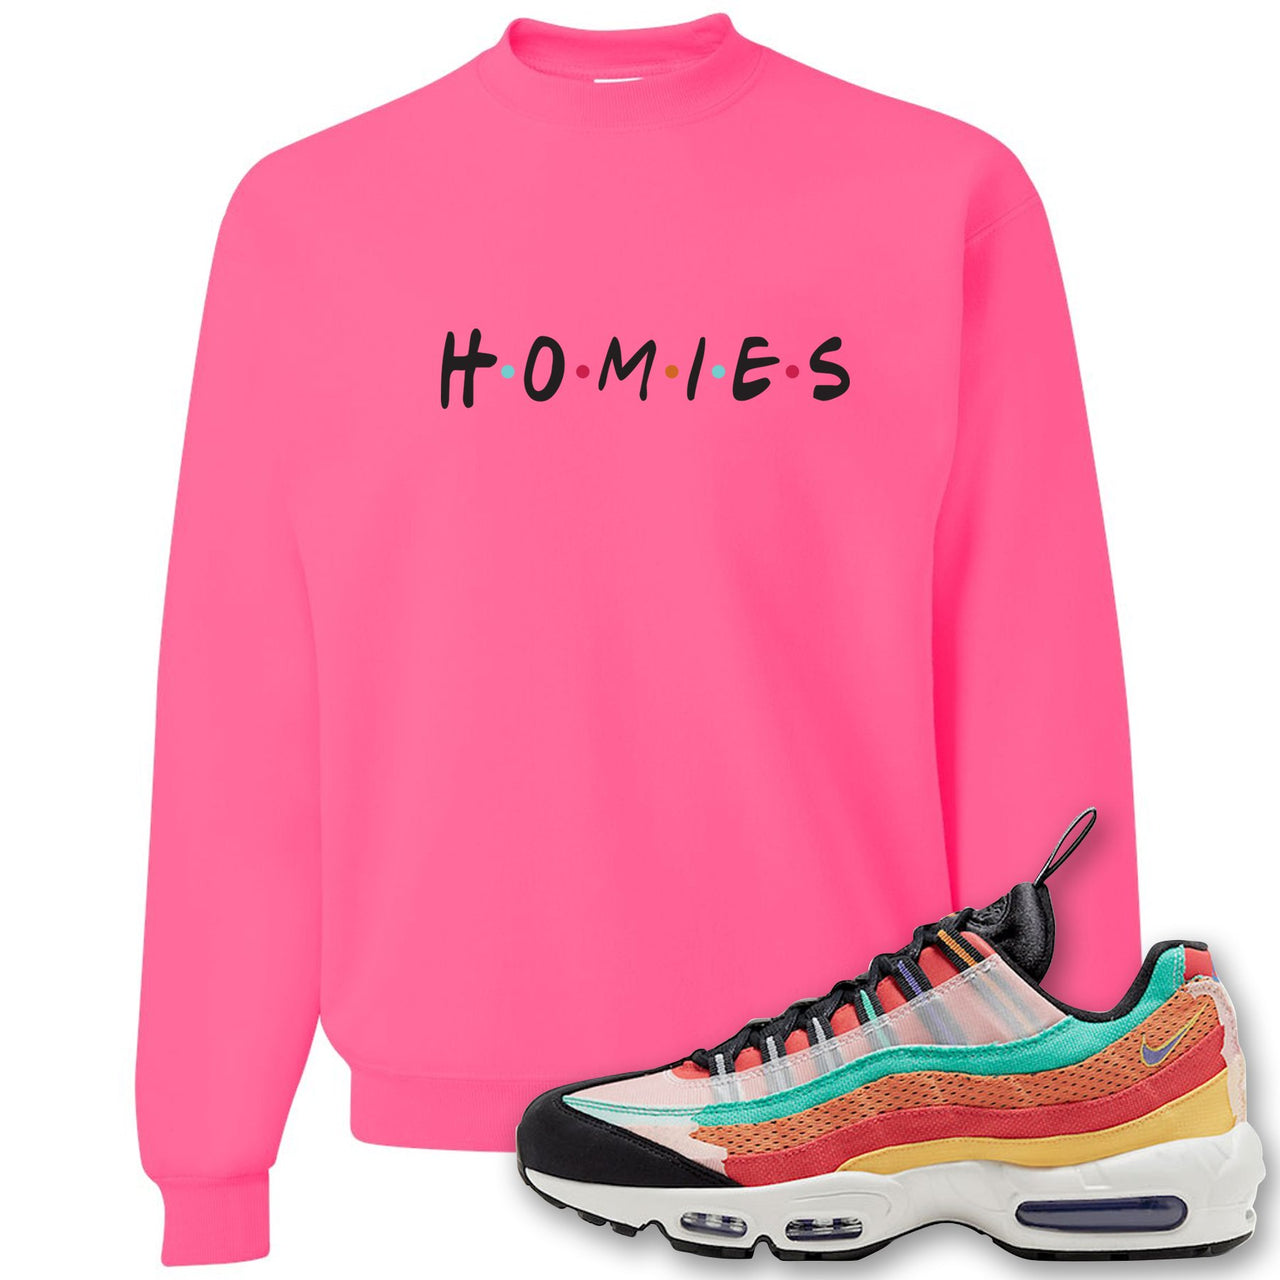 Air Max 95 Black History Month Sneaker Neon Pink Crewneck Sweatshirt | Crewneck to match Nike Air Max 95 Black History Month Shoes | Homies